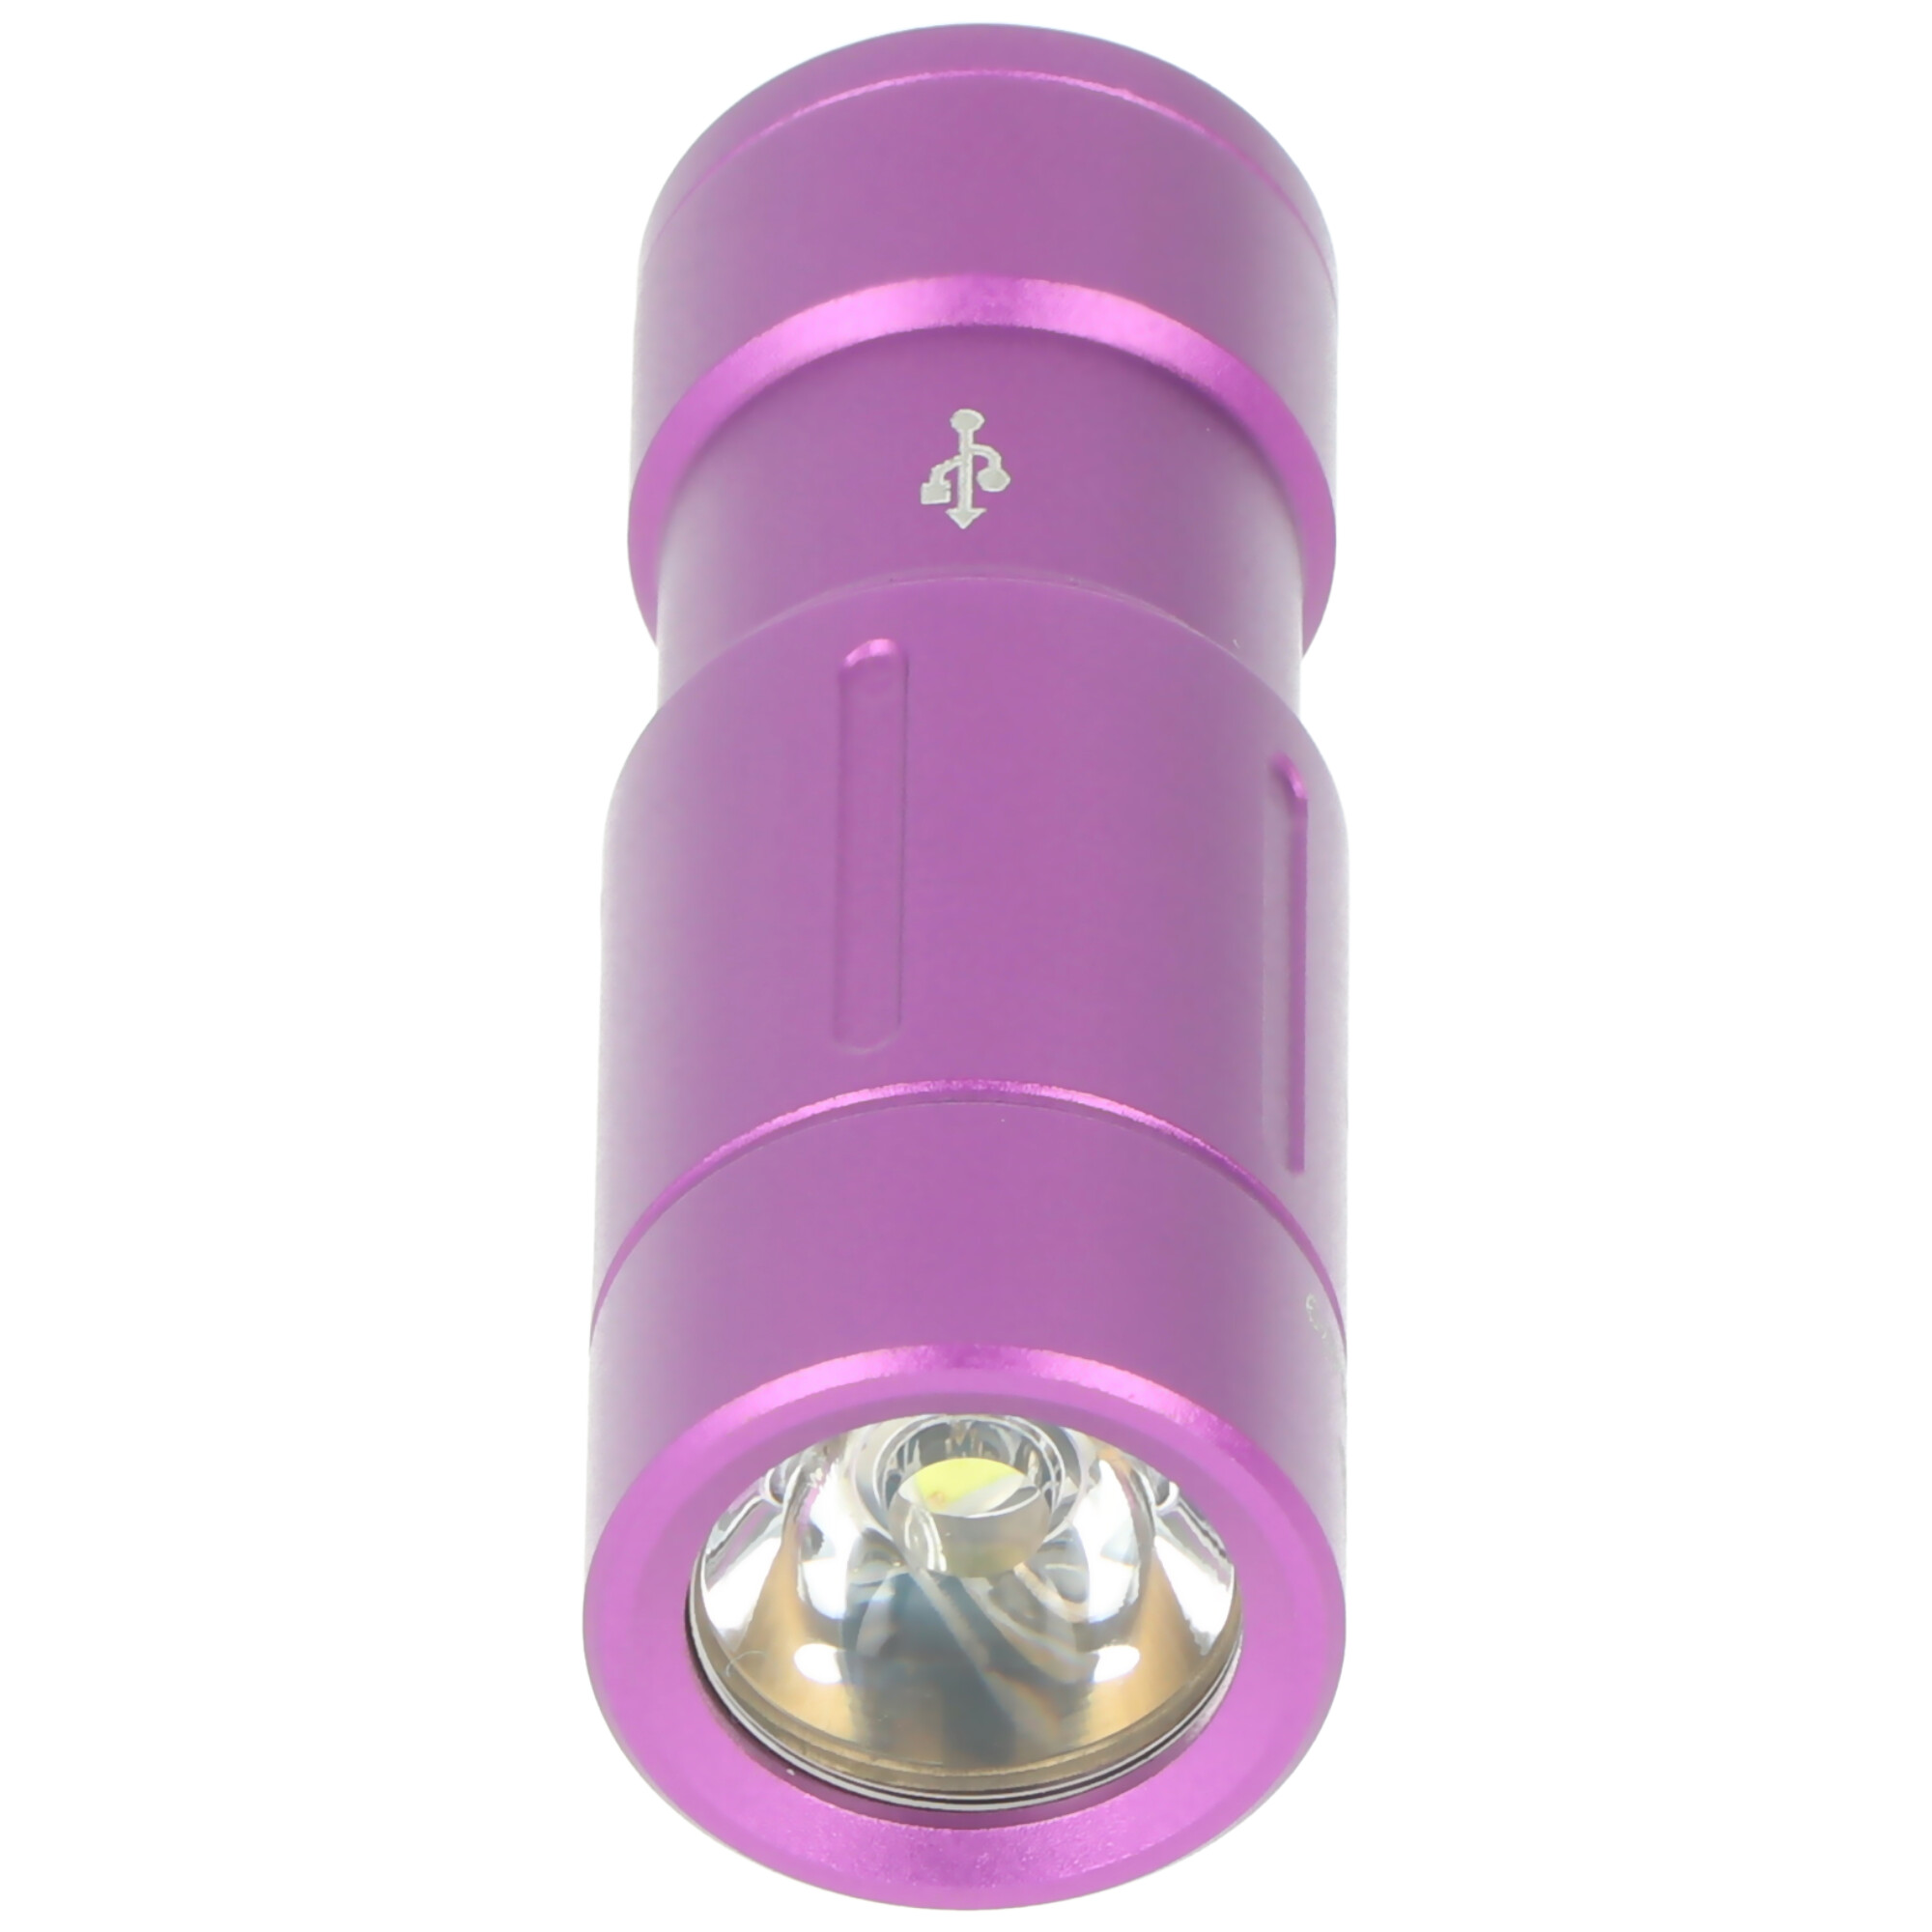 Fenix UC02 LED schlüsselbundleuchte lila mit Li-Ion Akku